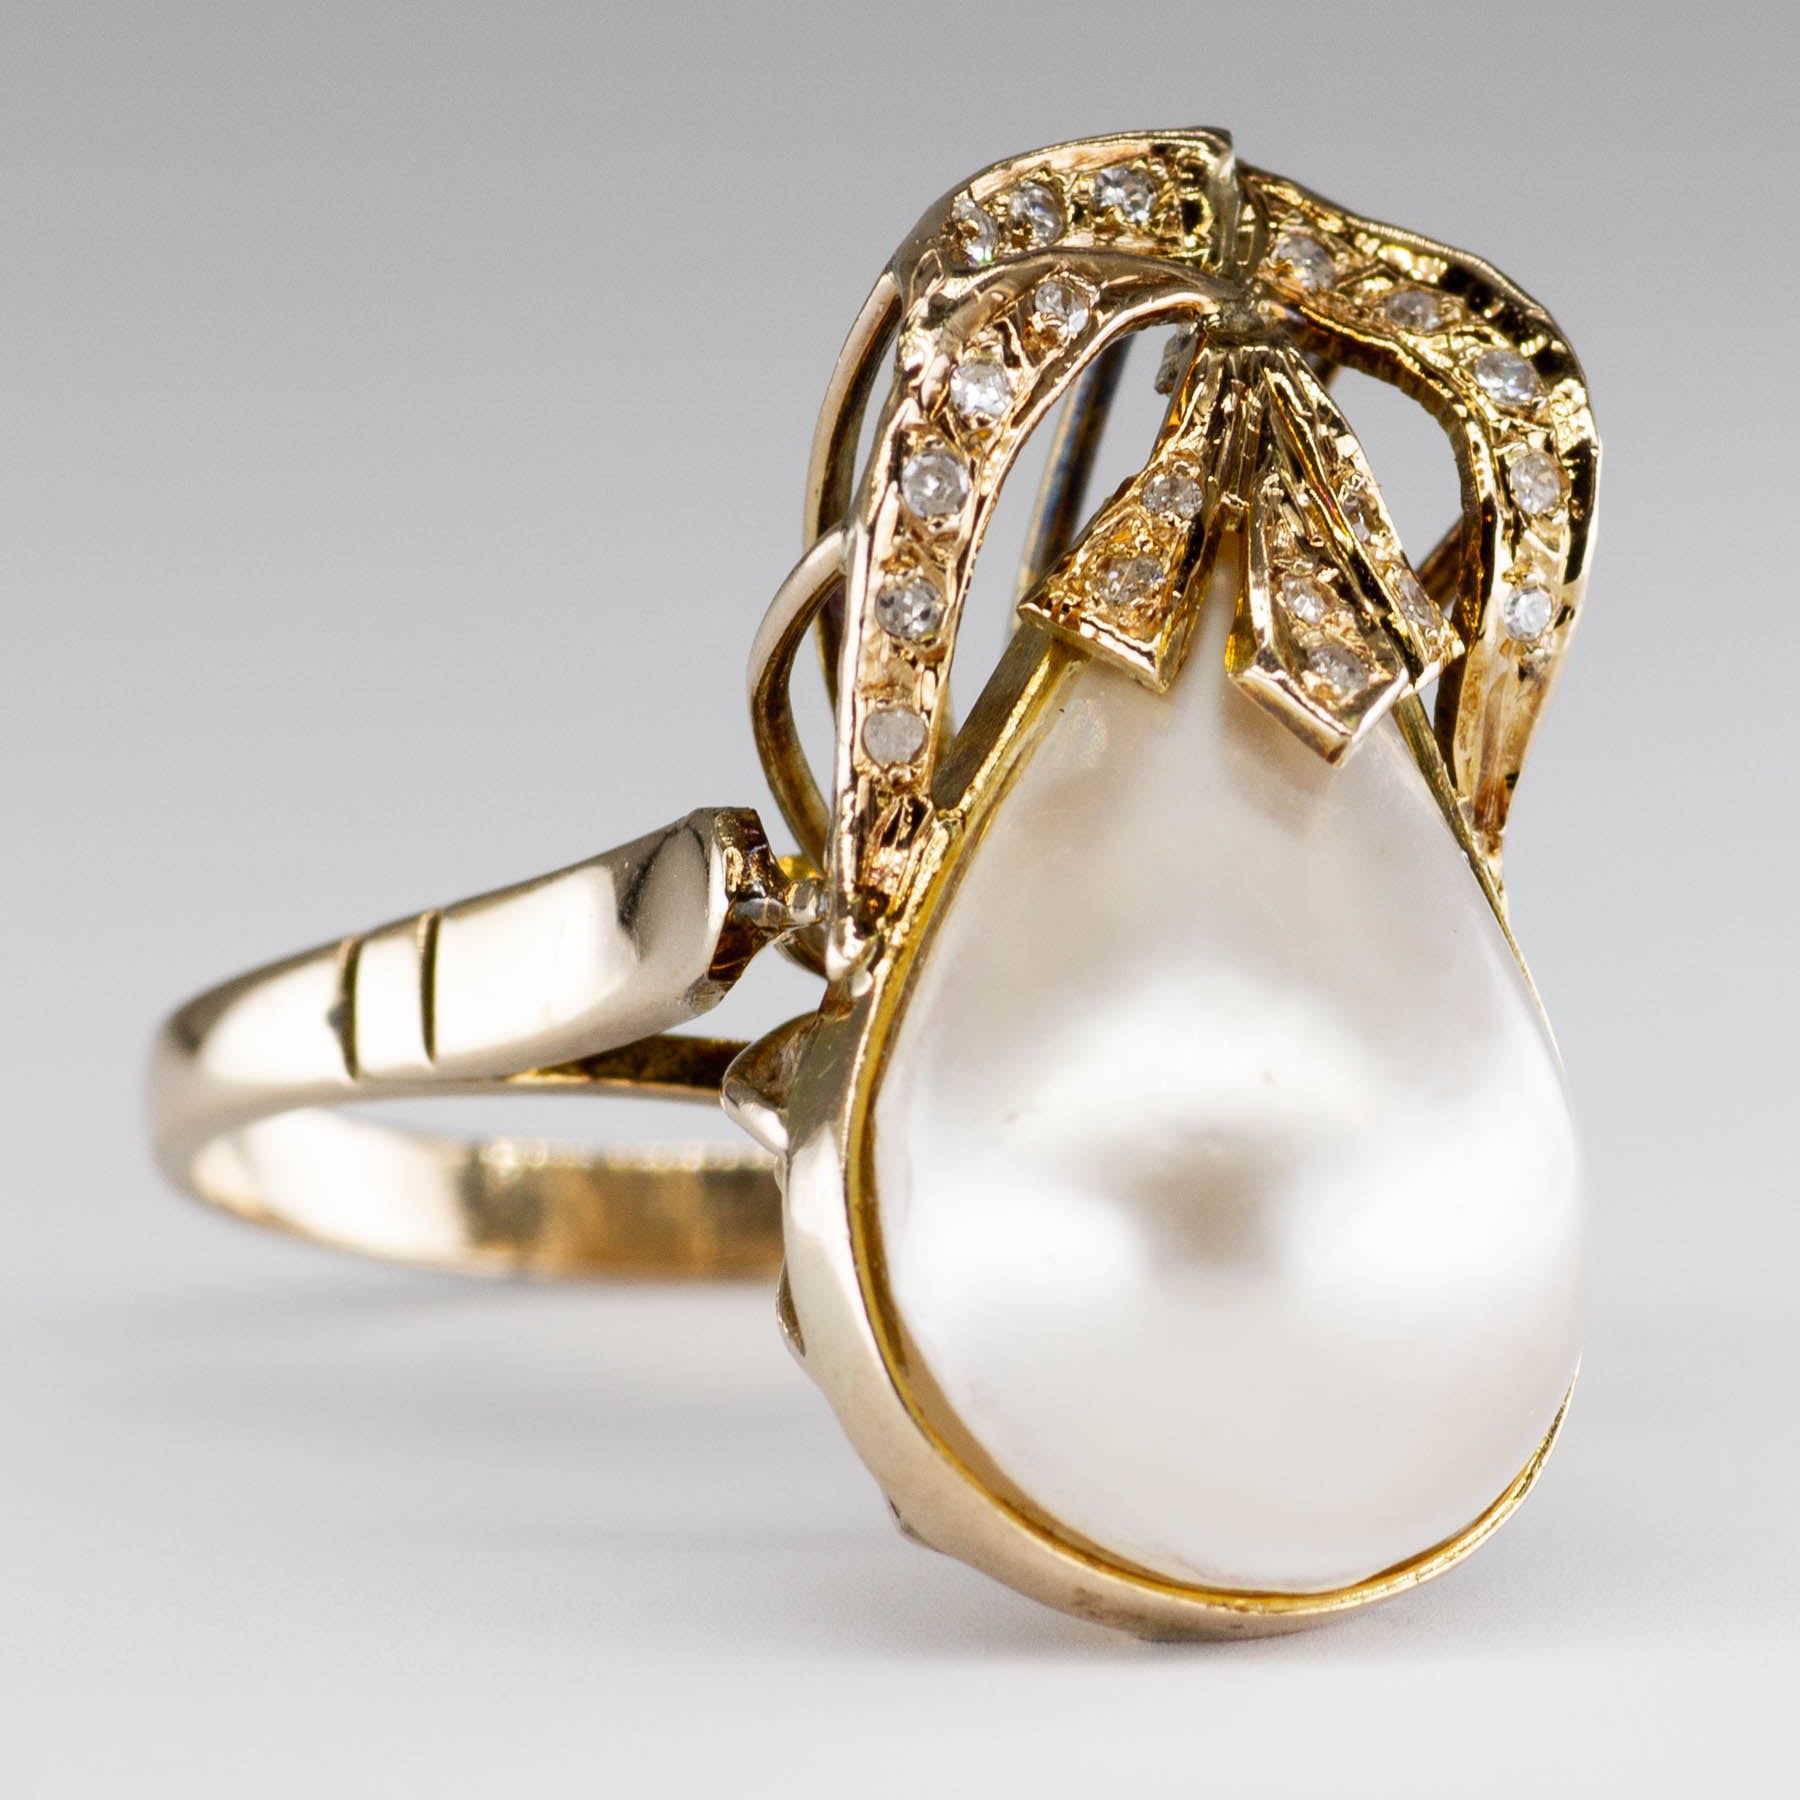 Art Nouveau Era Pearl & Diamond Ring | 0.05 ctw SZ 7 |